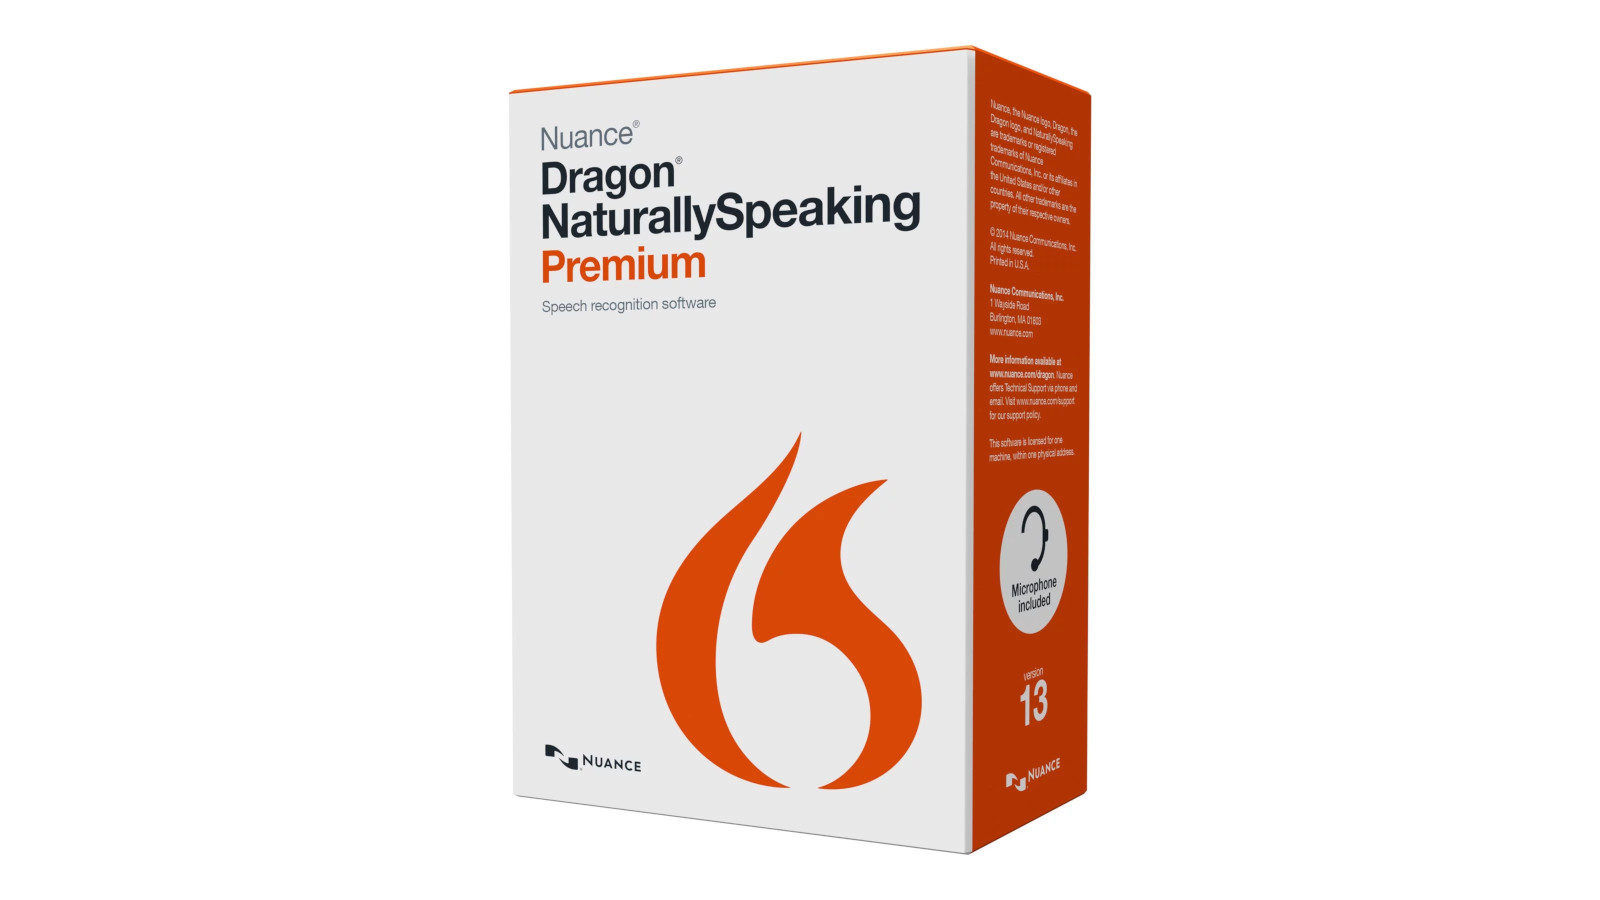 Nuance Dragon NaturallySpeaking Premium 13 Key (Lifetime / 1 PC) $13.73